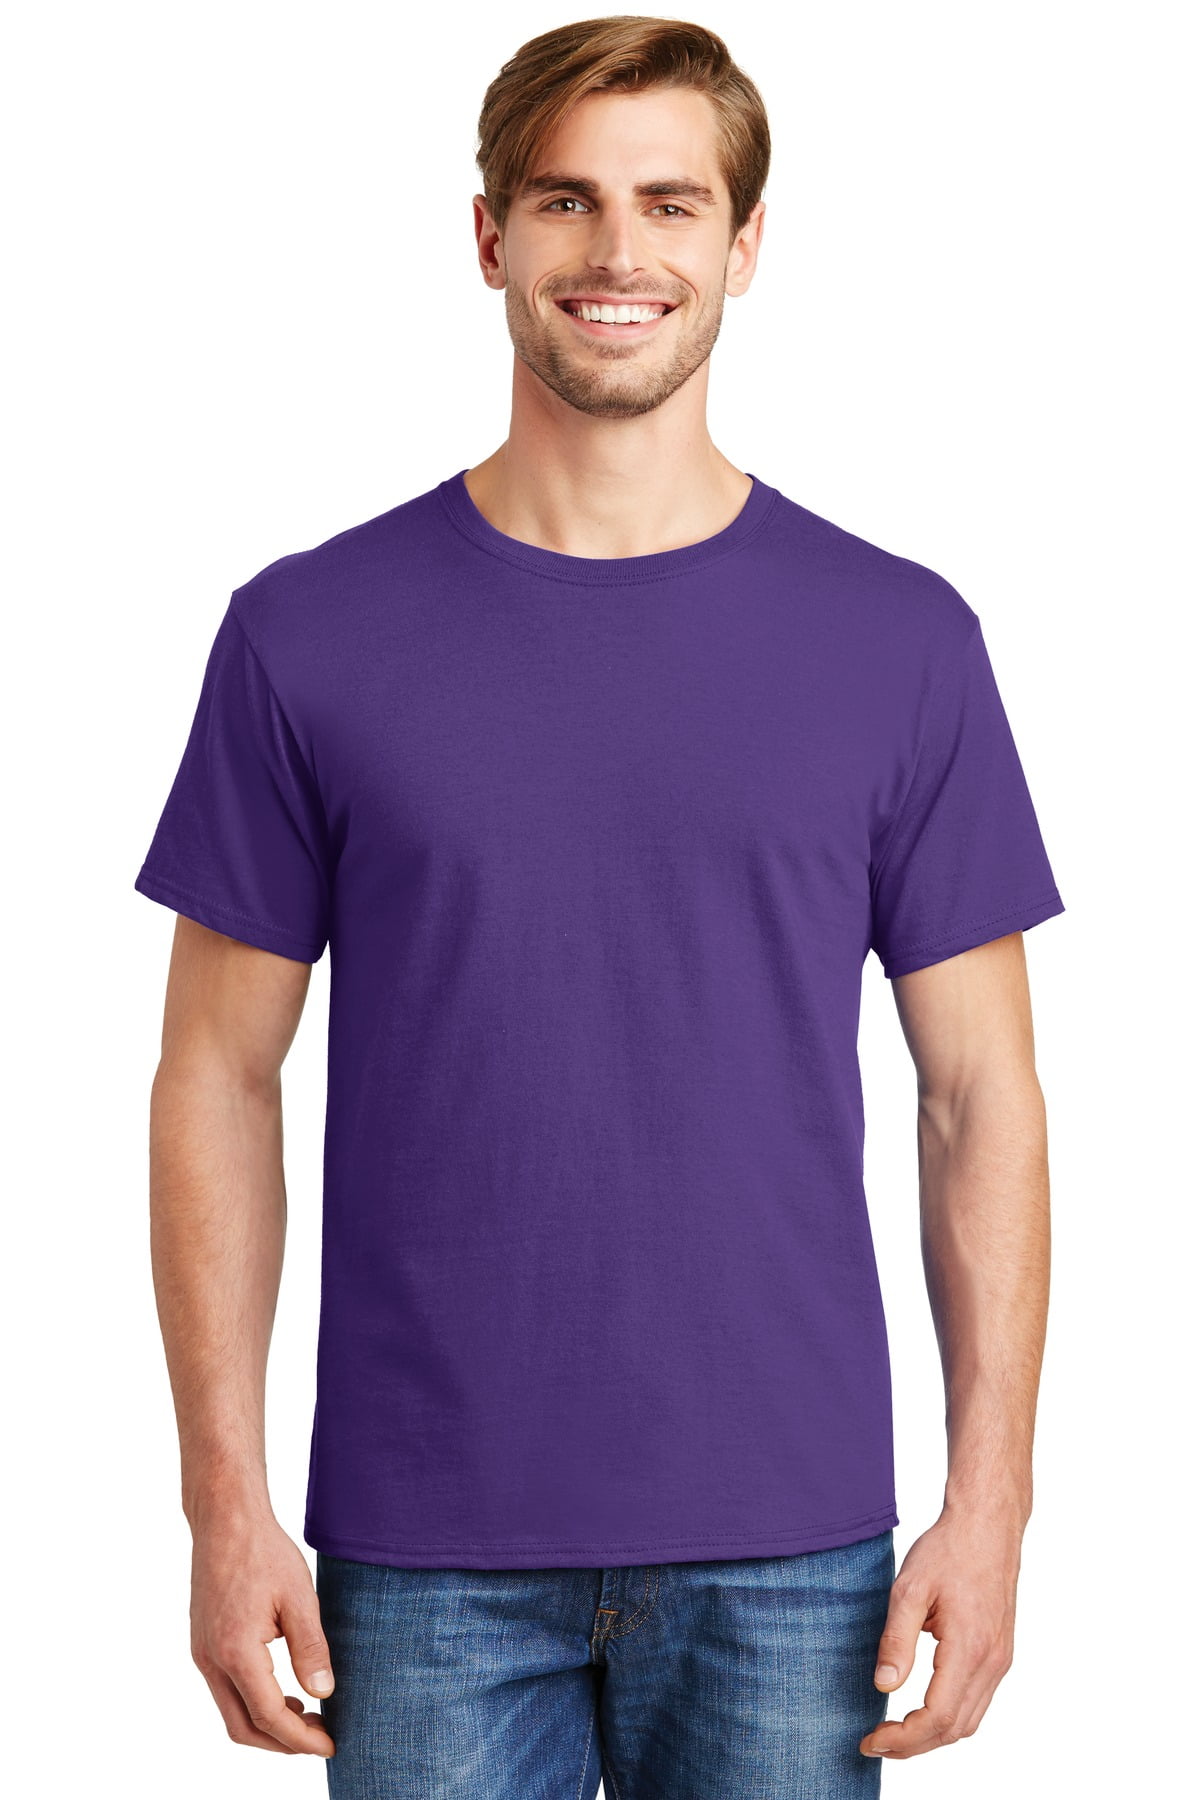 Hanes ComfortSoft 100% Cotton T-Shirt - Walmart.com